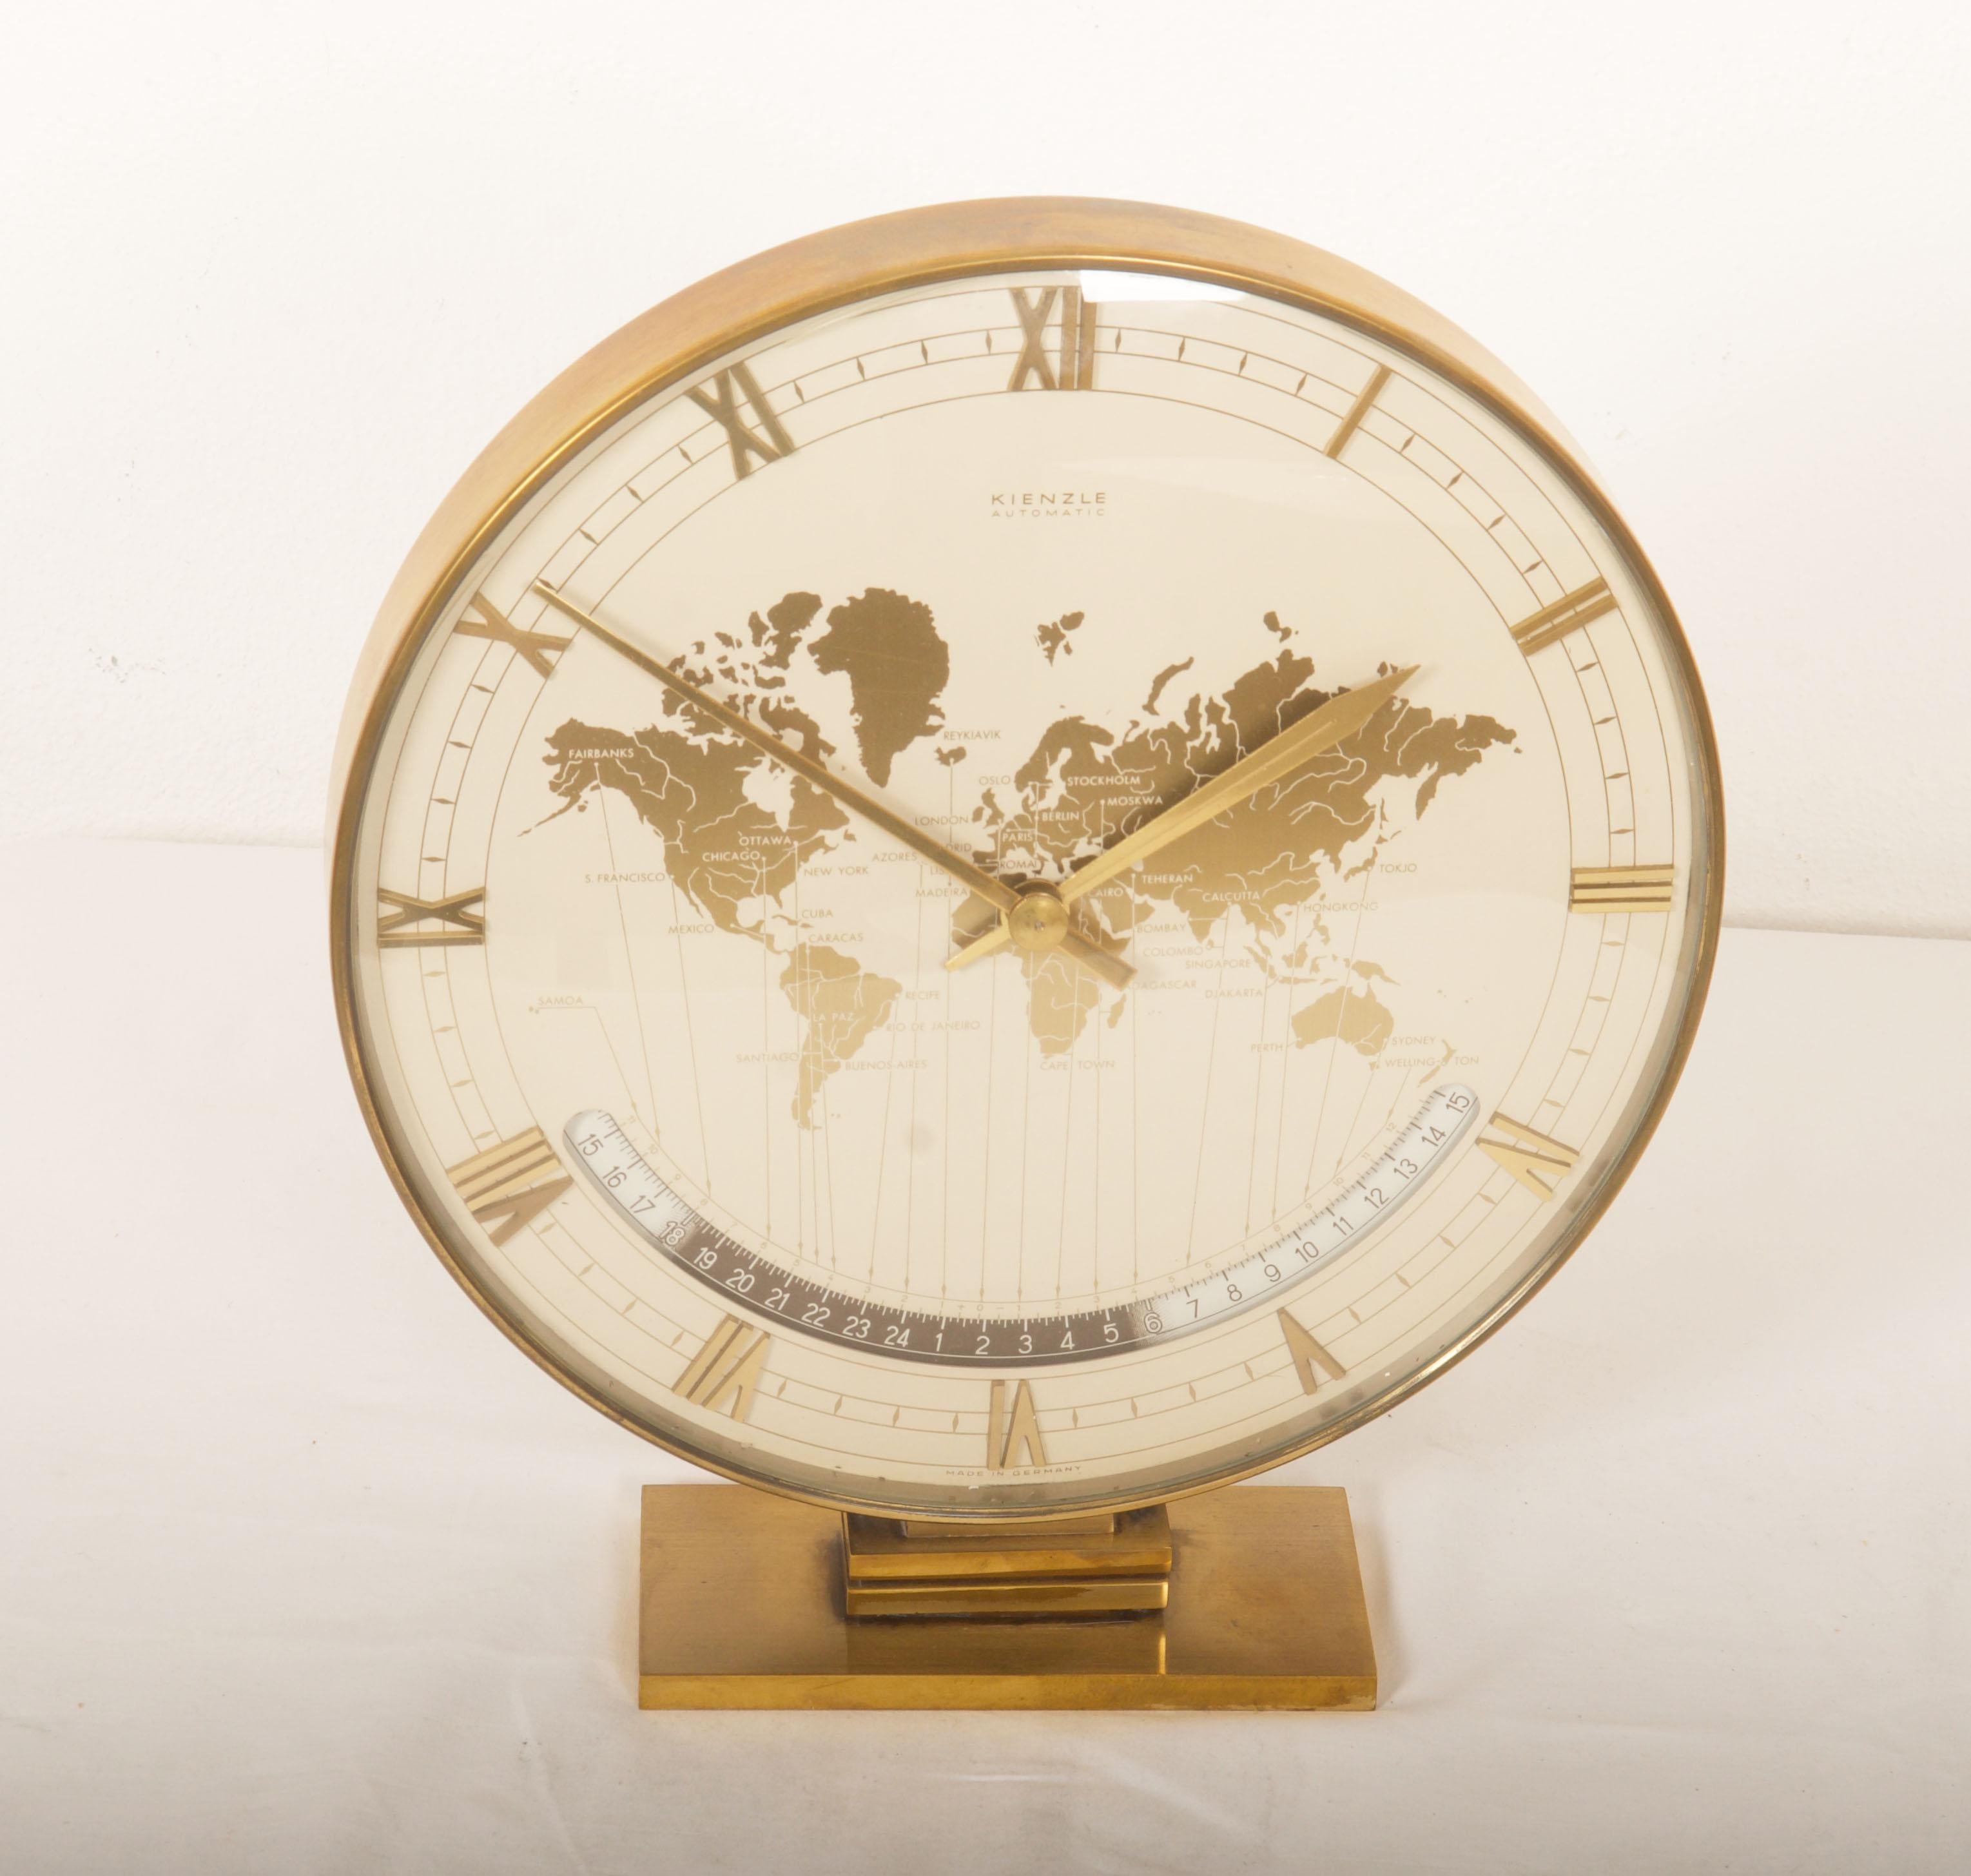 Big Kienzle Weltzeituhr Modernist Table World Timer Zone Clock, 1960s For Sale 1